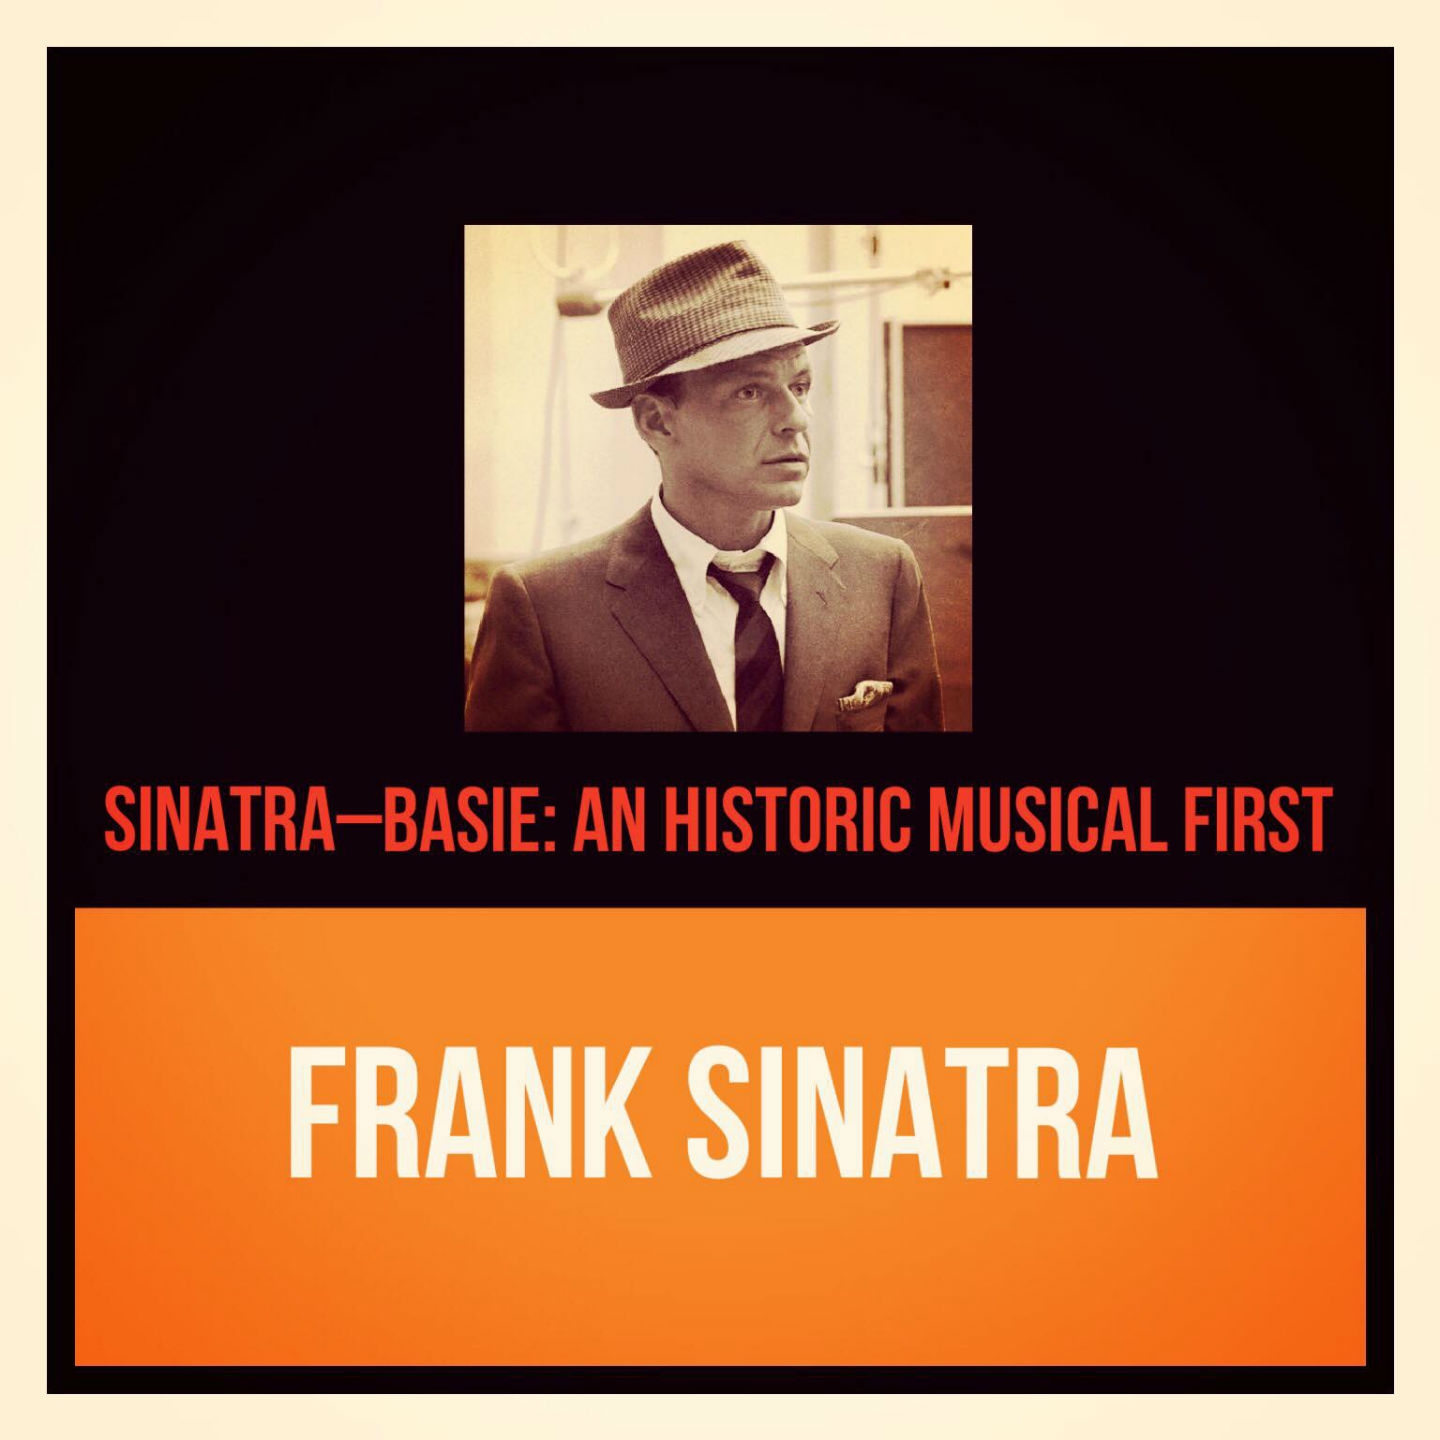 Sinatra-basie: An Historic Musical First